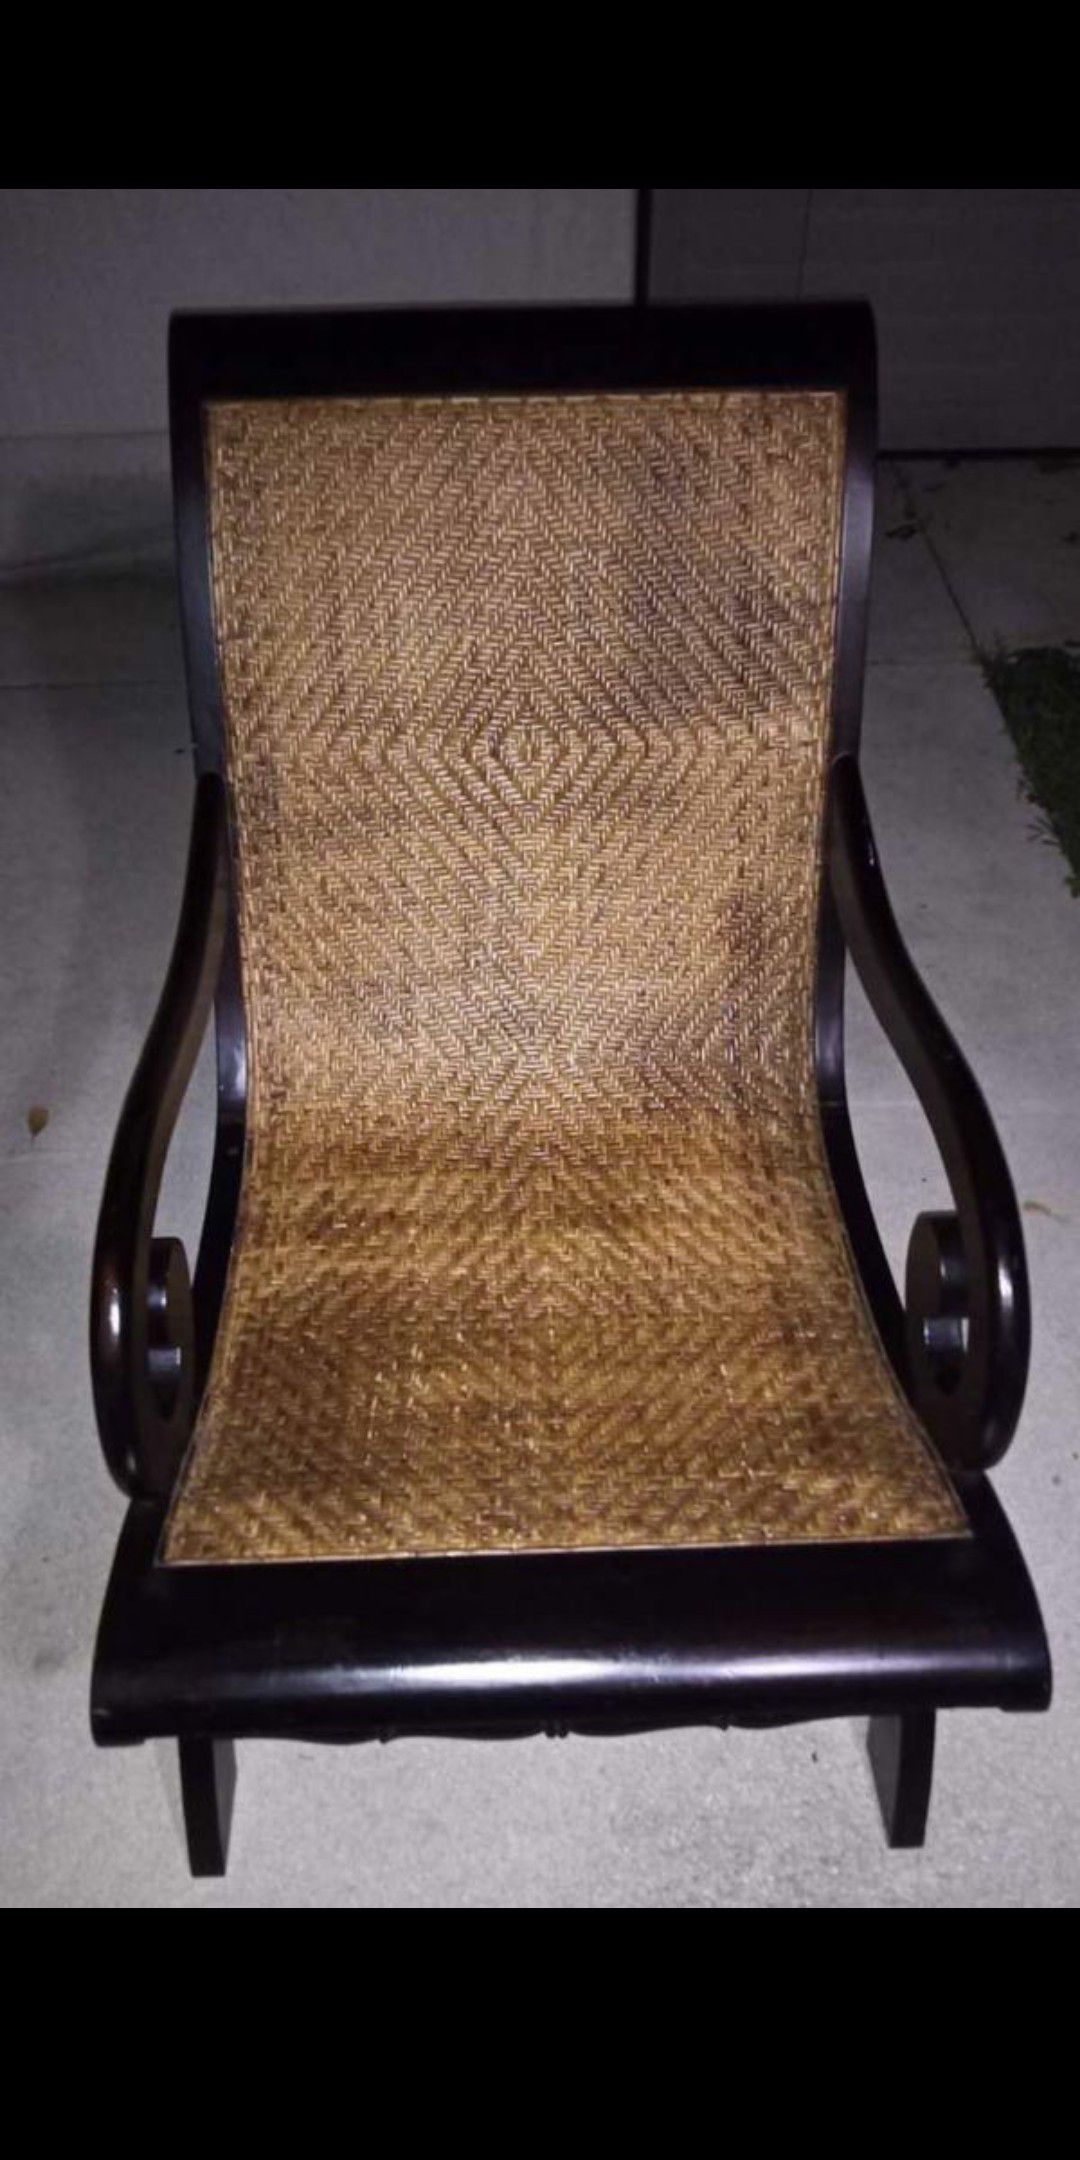 Plantation chair